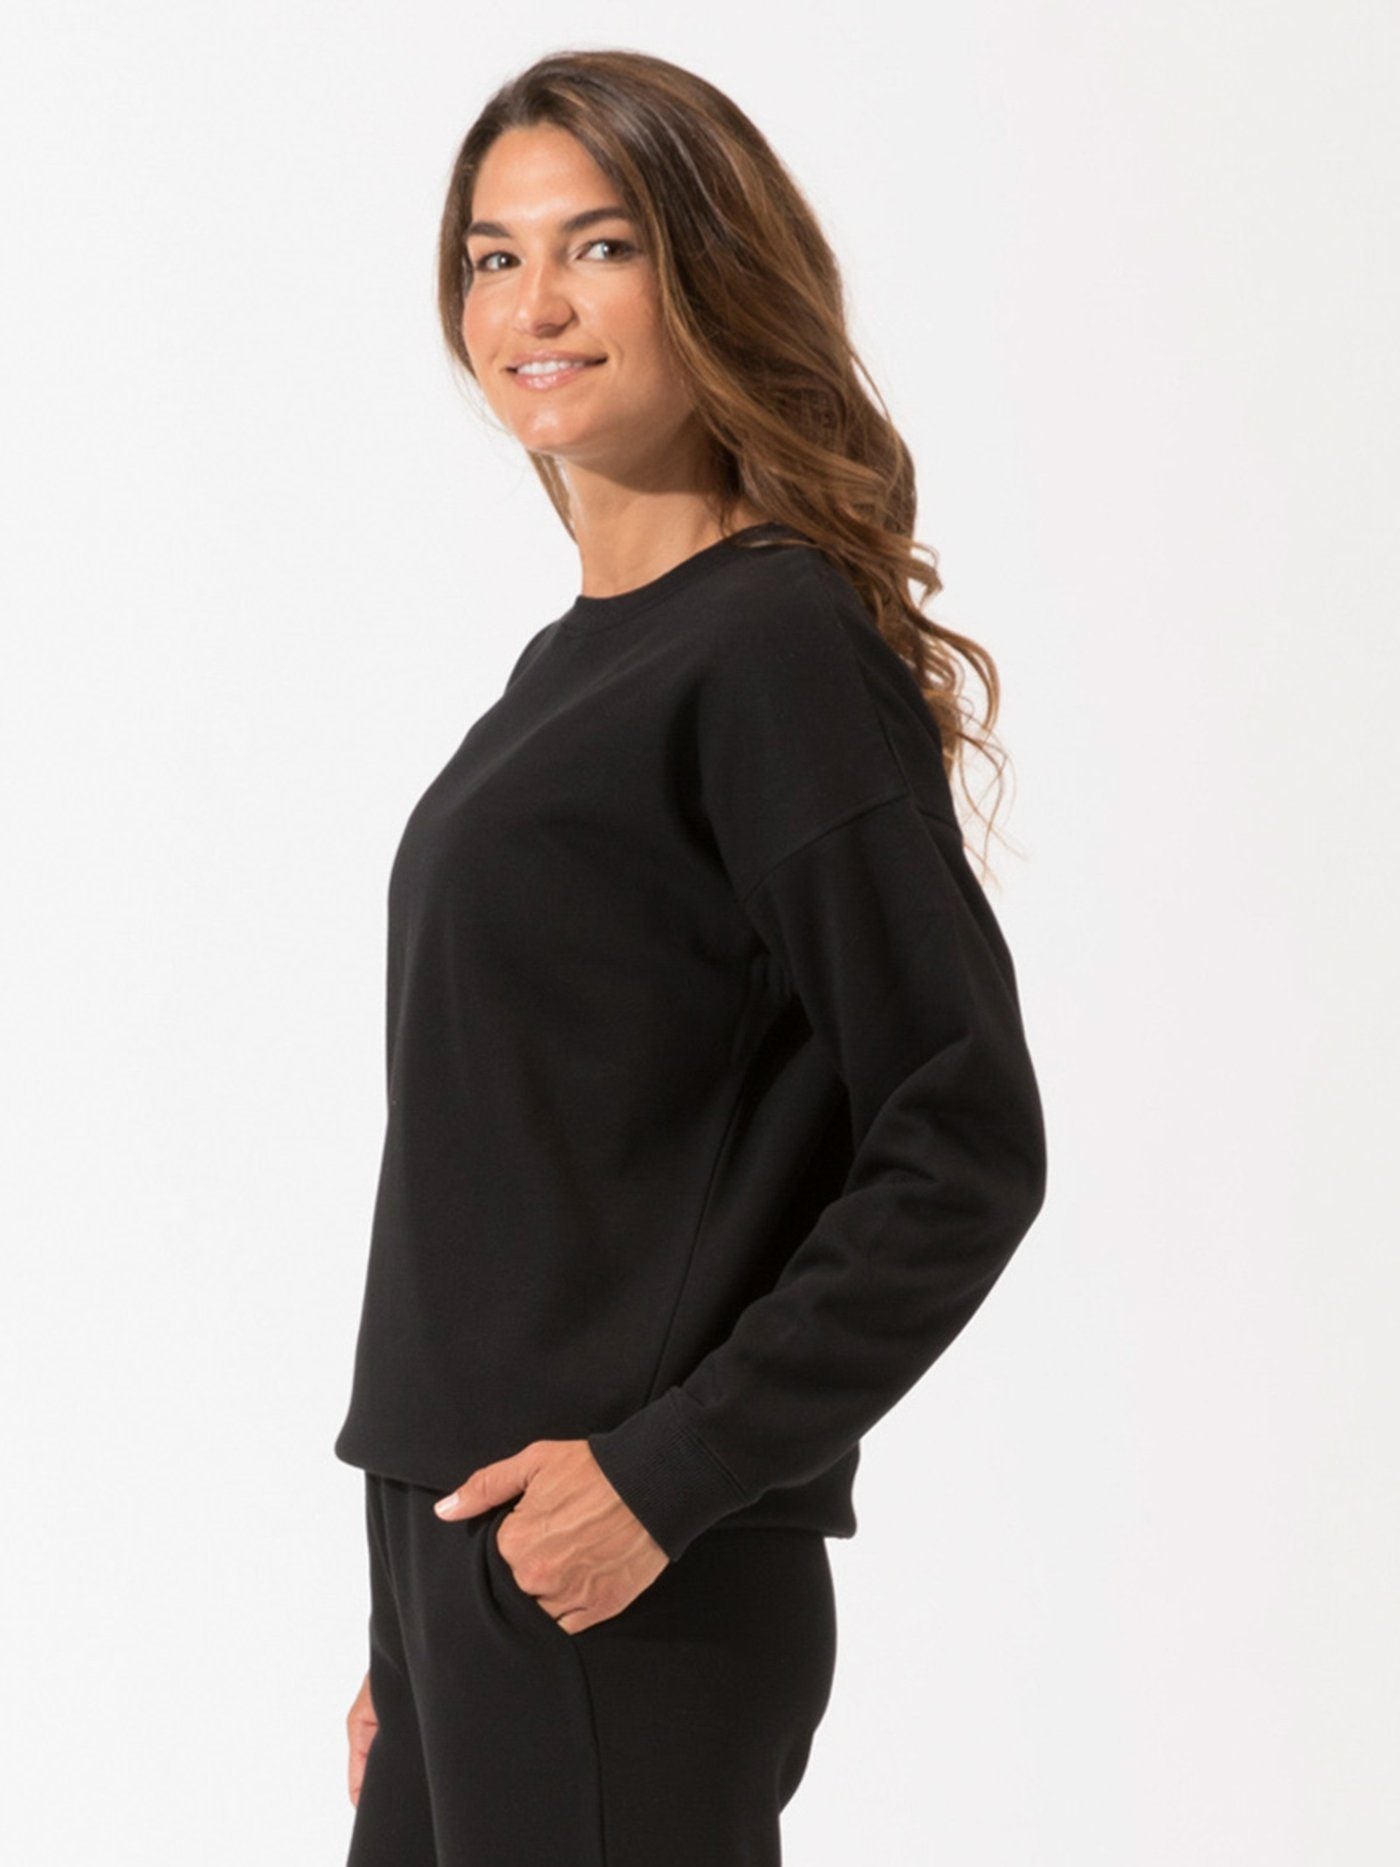 WoInvincible Fleece Pullover Crew Womens Outerwear Sweatshirt Threads 4 Thought 